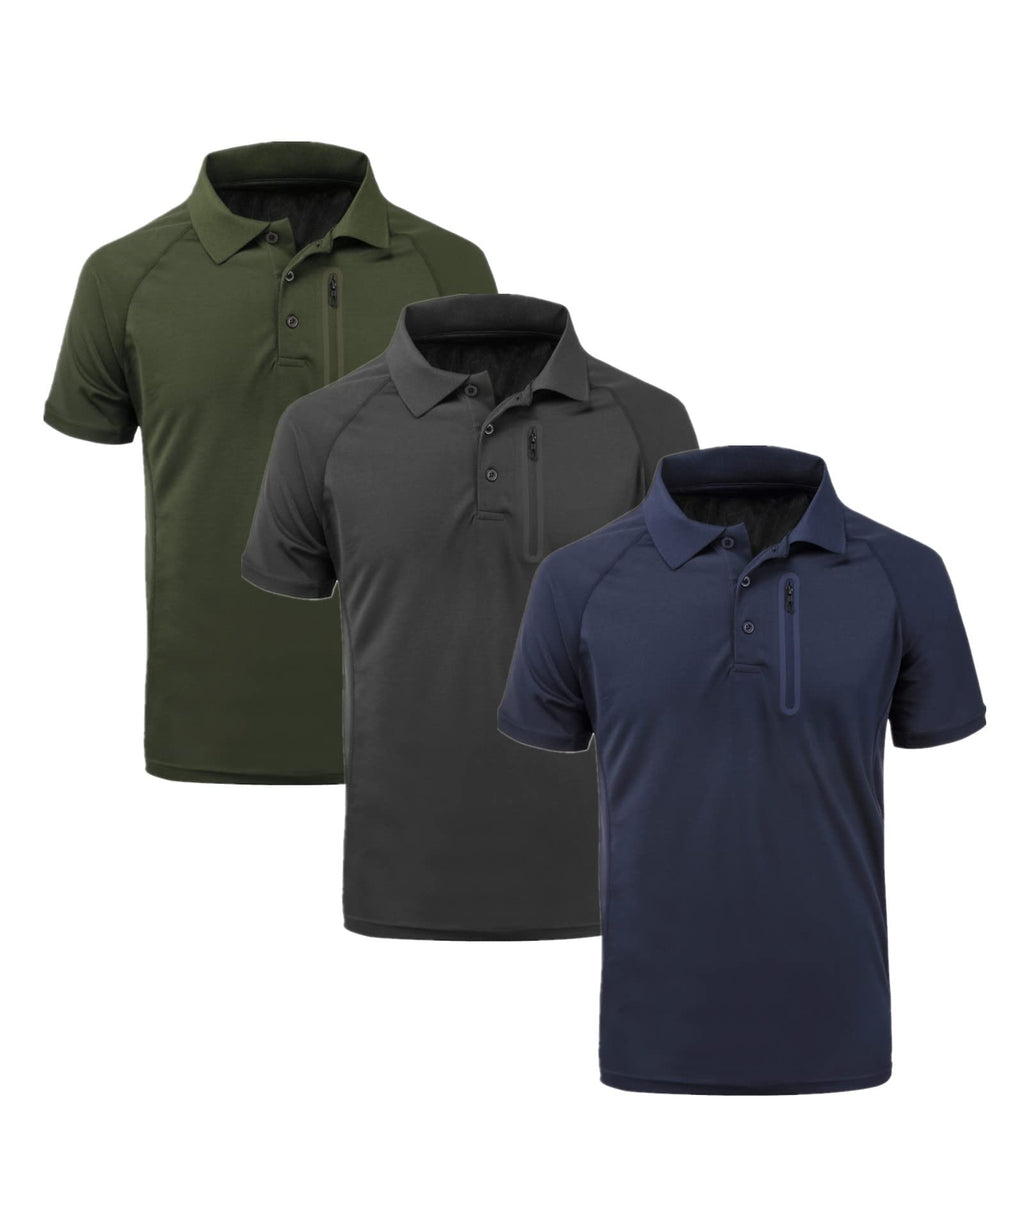 ZITY Golf Polo Shirts for Men Short Sleeve Sport Casual Tennis T-Shirt A-3pc 3X-Large - BeesActive Australia